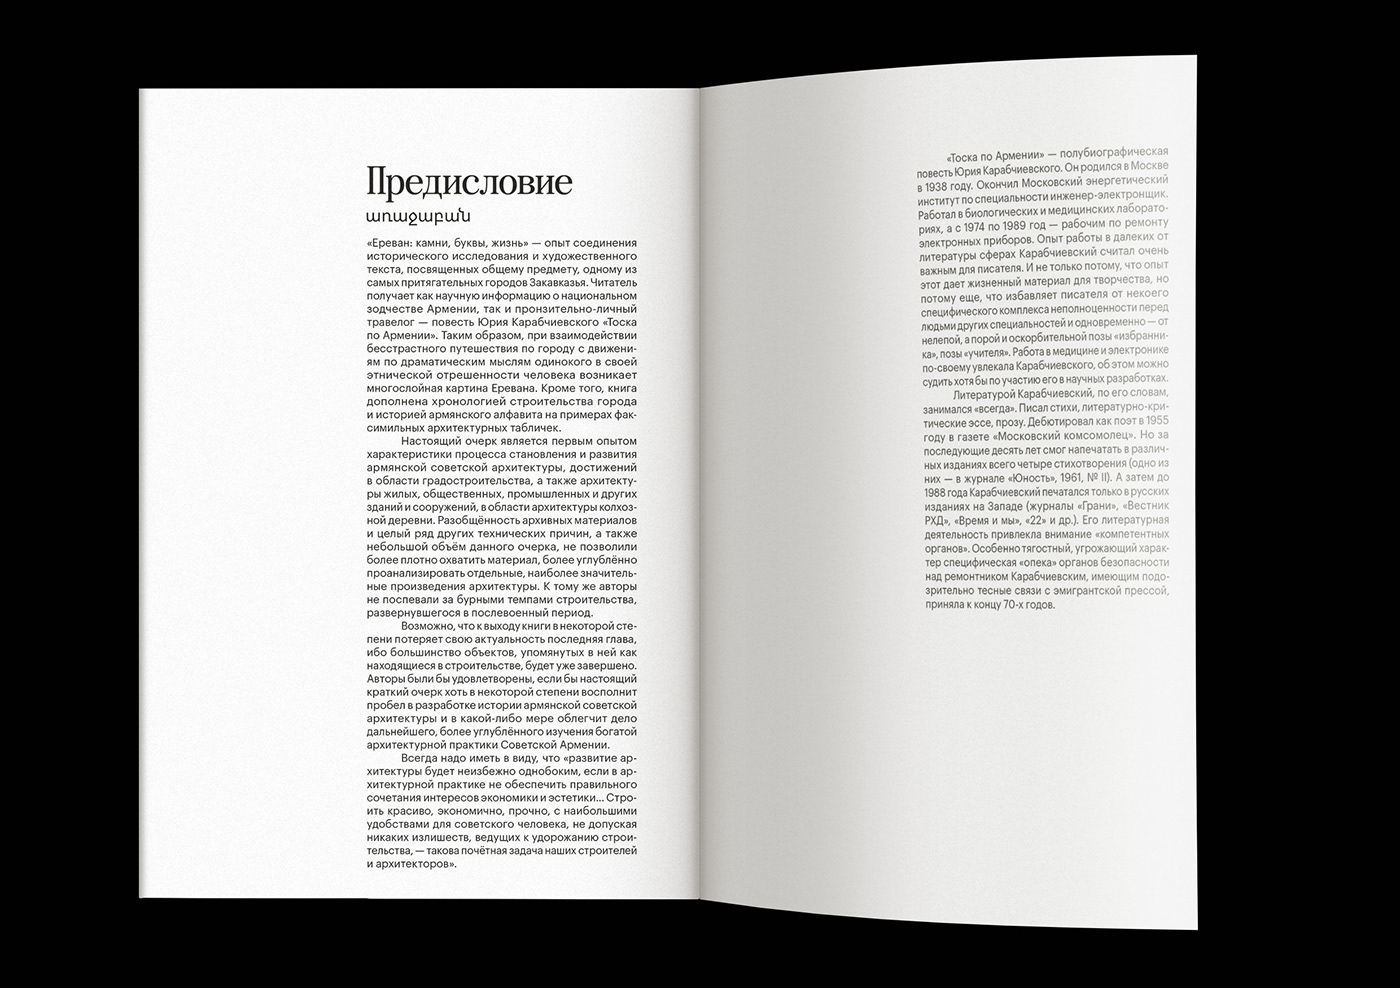 Armenia book design editorial lettering